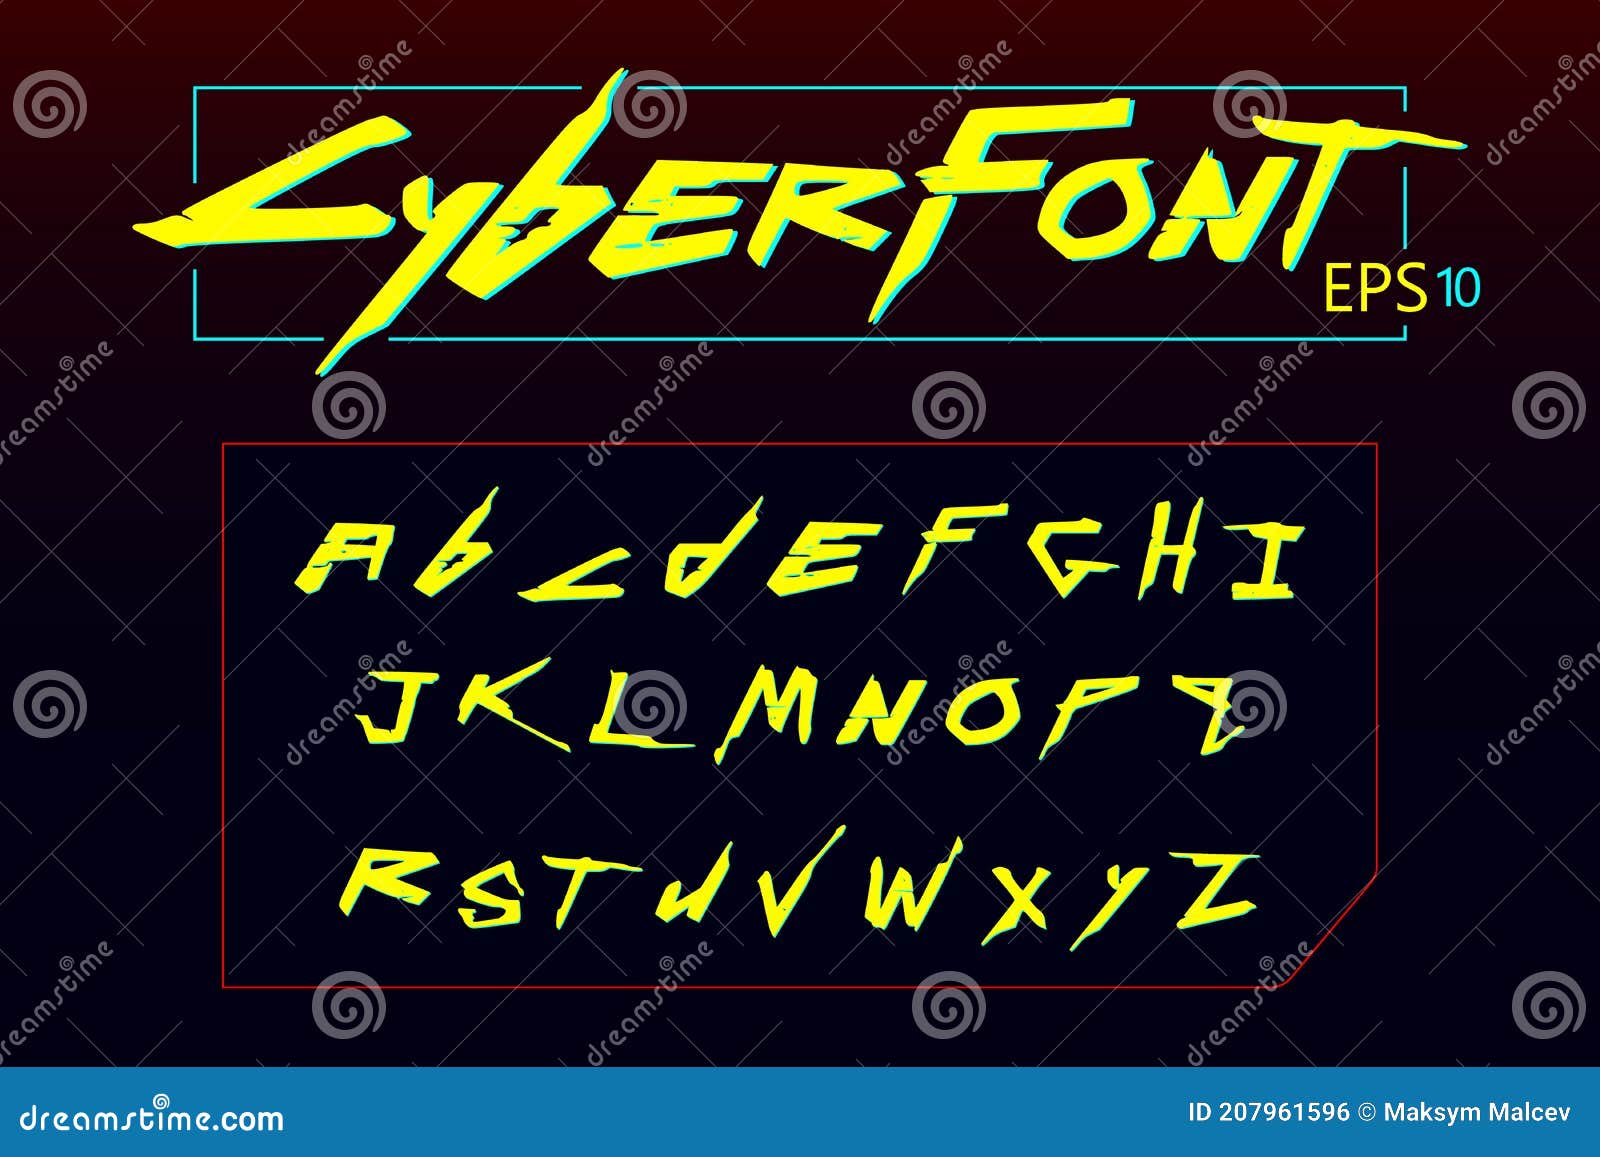 Cyberpunk font generator фото 72